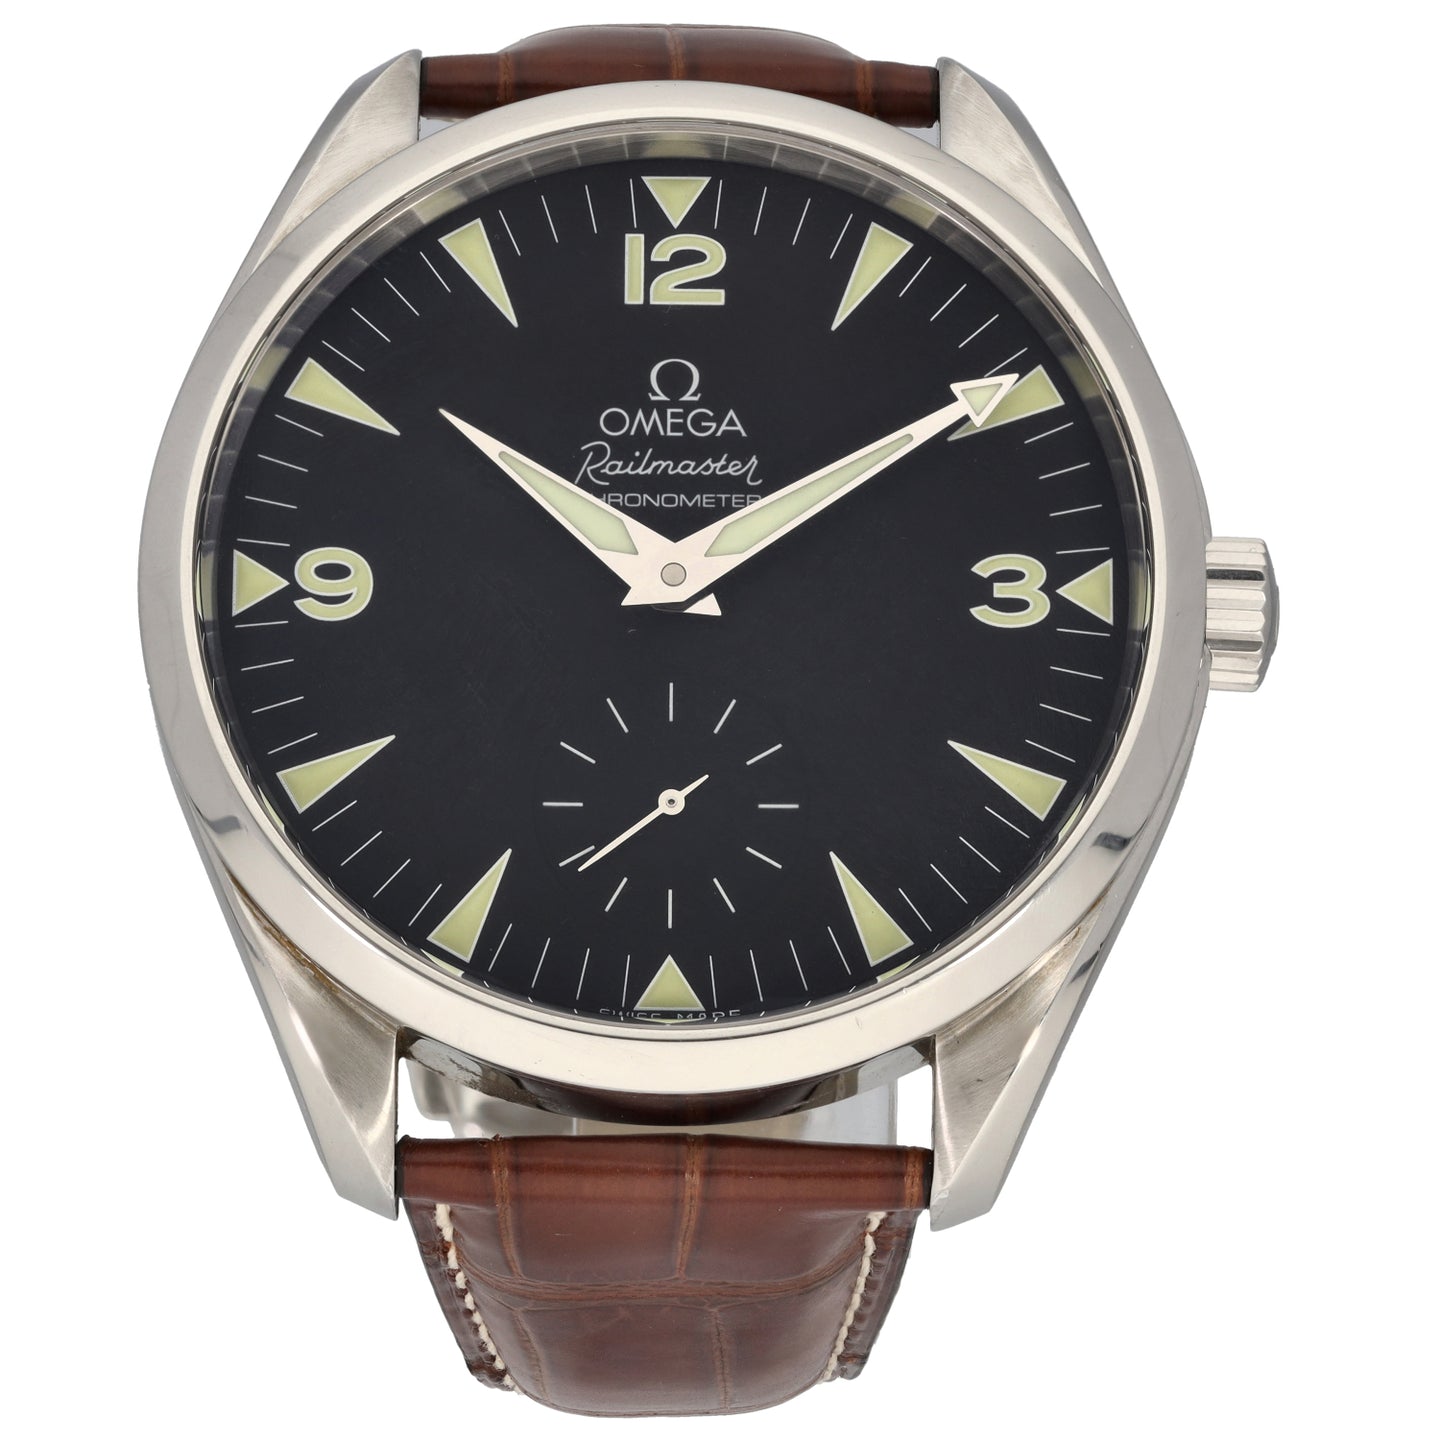 Omega Seamaster Aqua Terra 2806.52.37 49.2mm Stainless Steel Watch